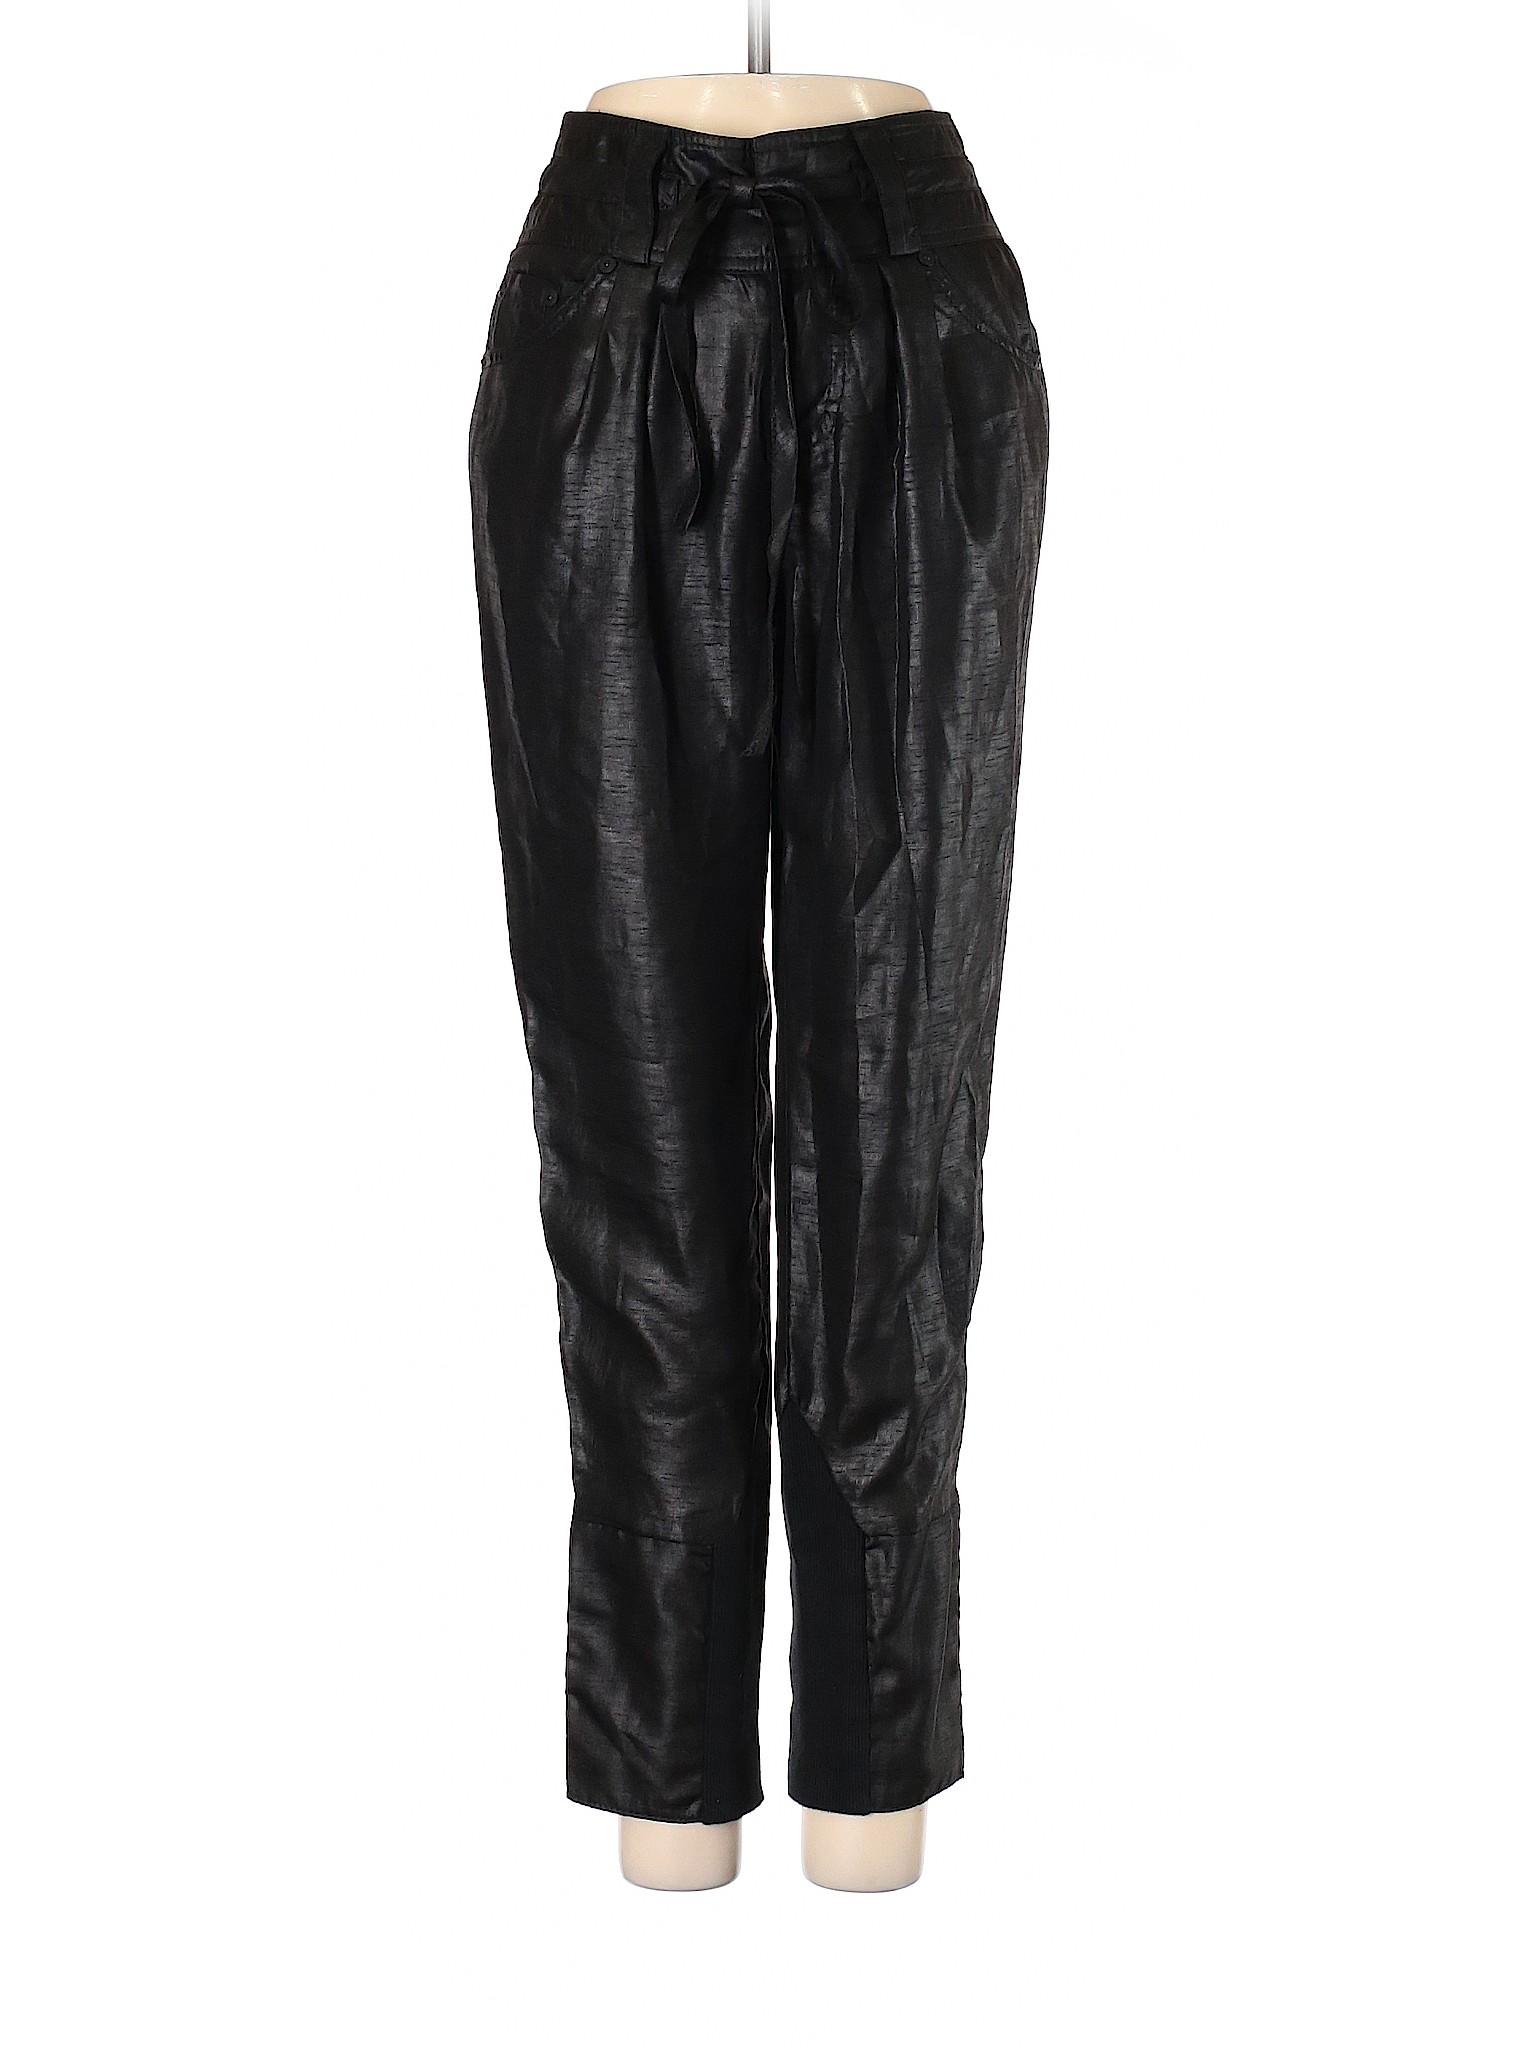 Guess Jeans Women Black Casual Pants 23W | eBay